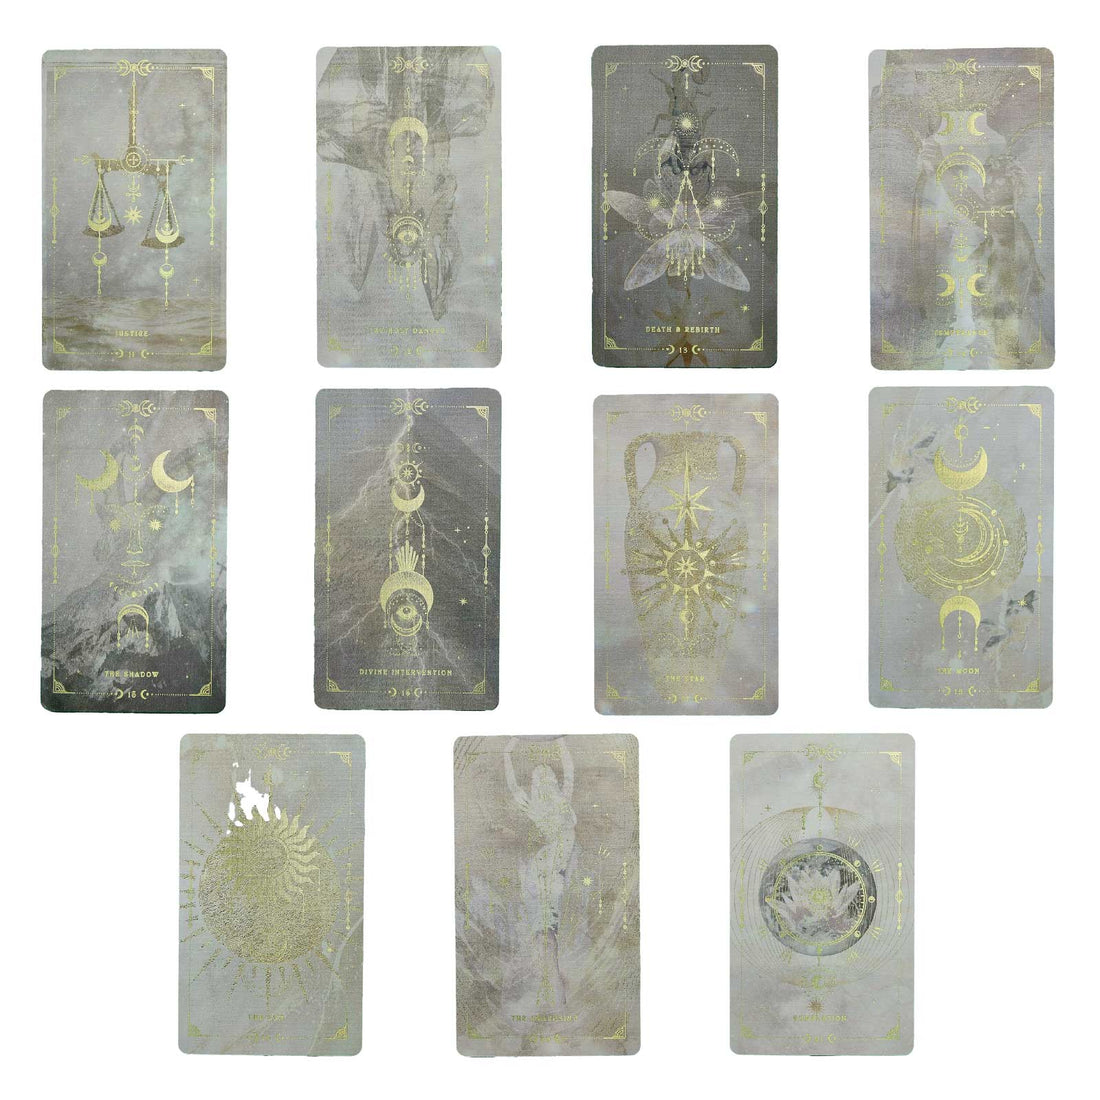 mystic dreams advanced tarot | major arcana cards 11 to 21